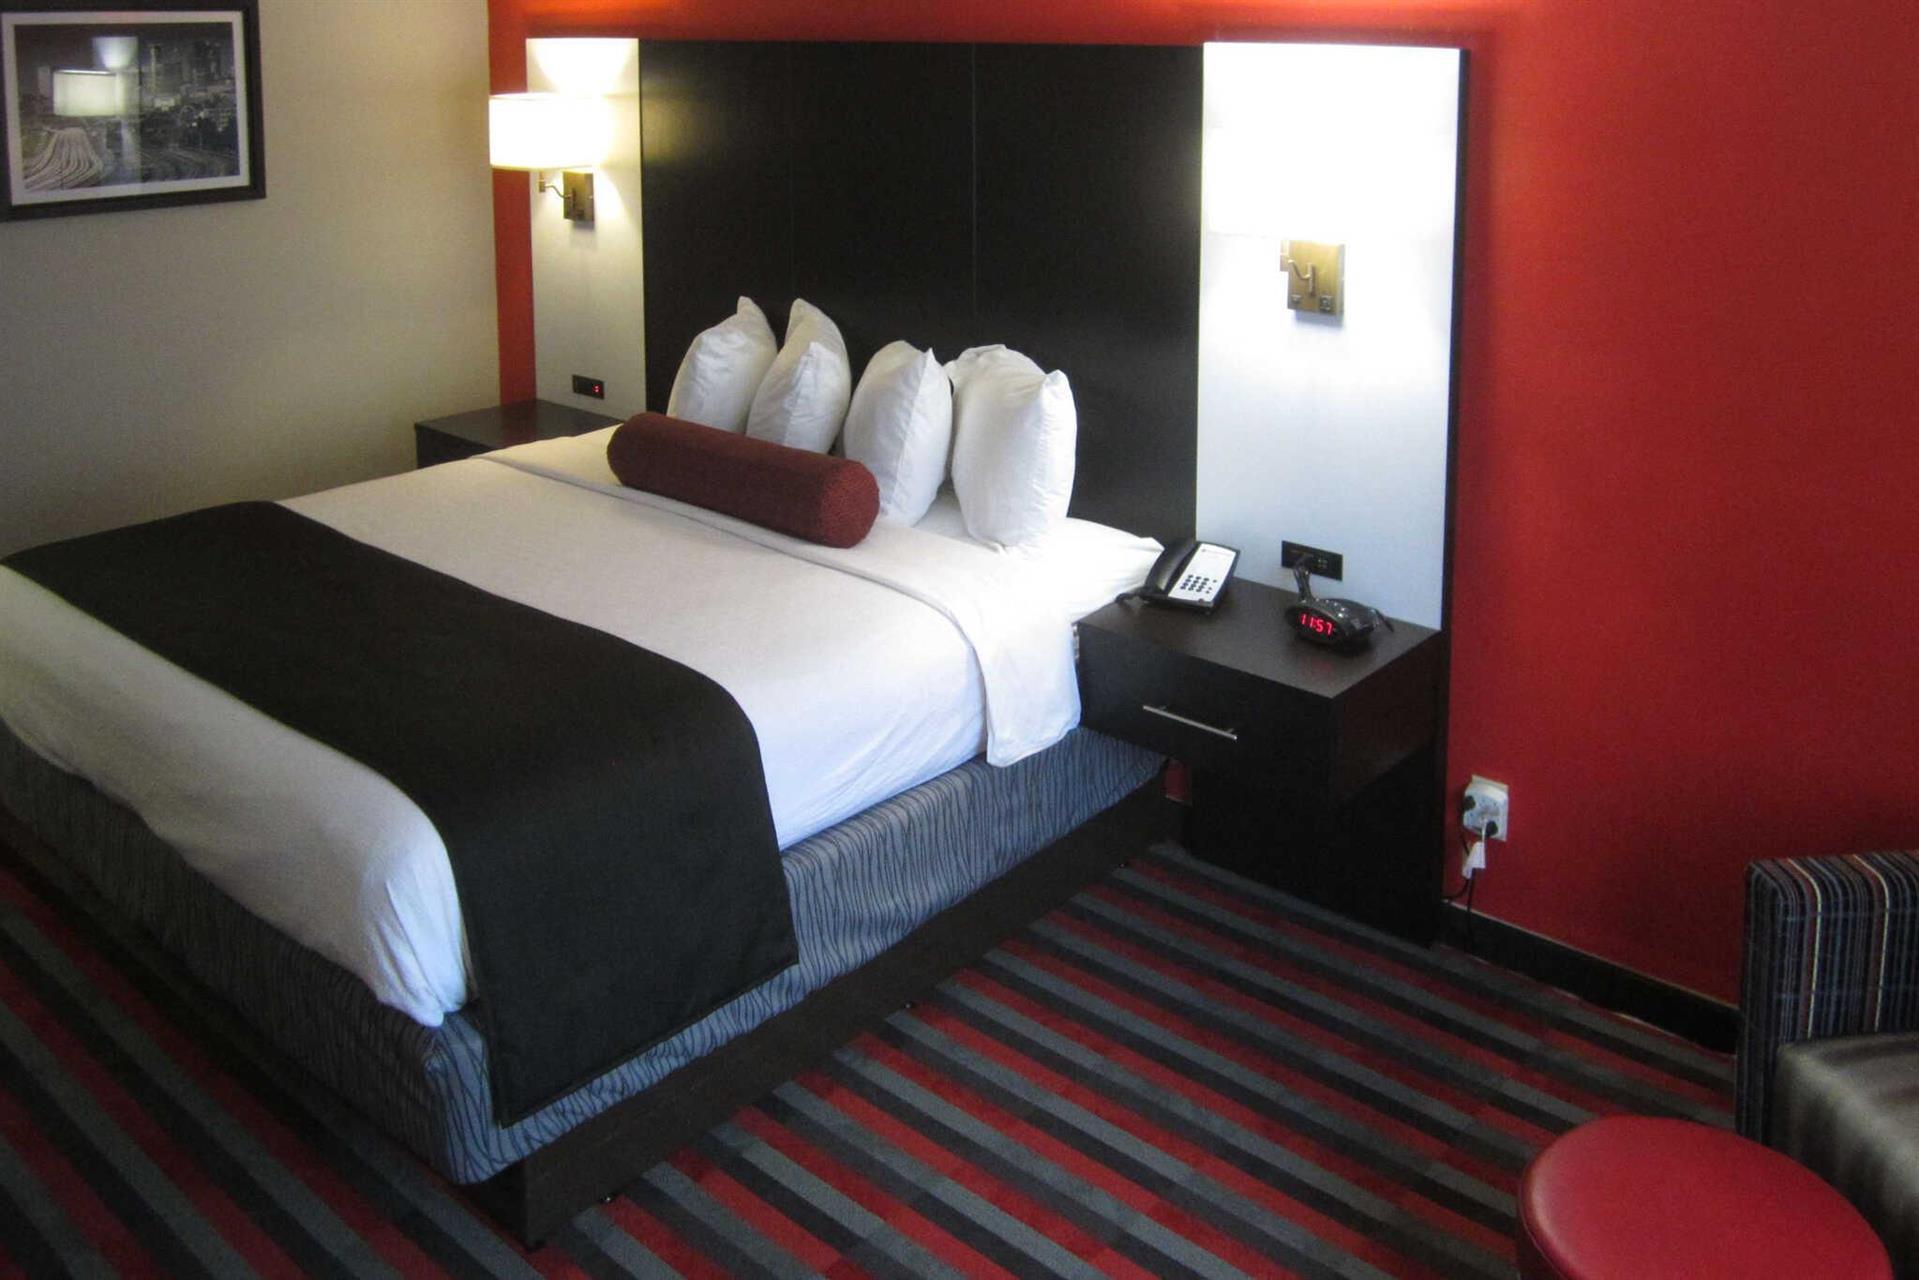 Comfort Inn and Suites Carrollton in Carrollton, GA